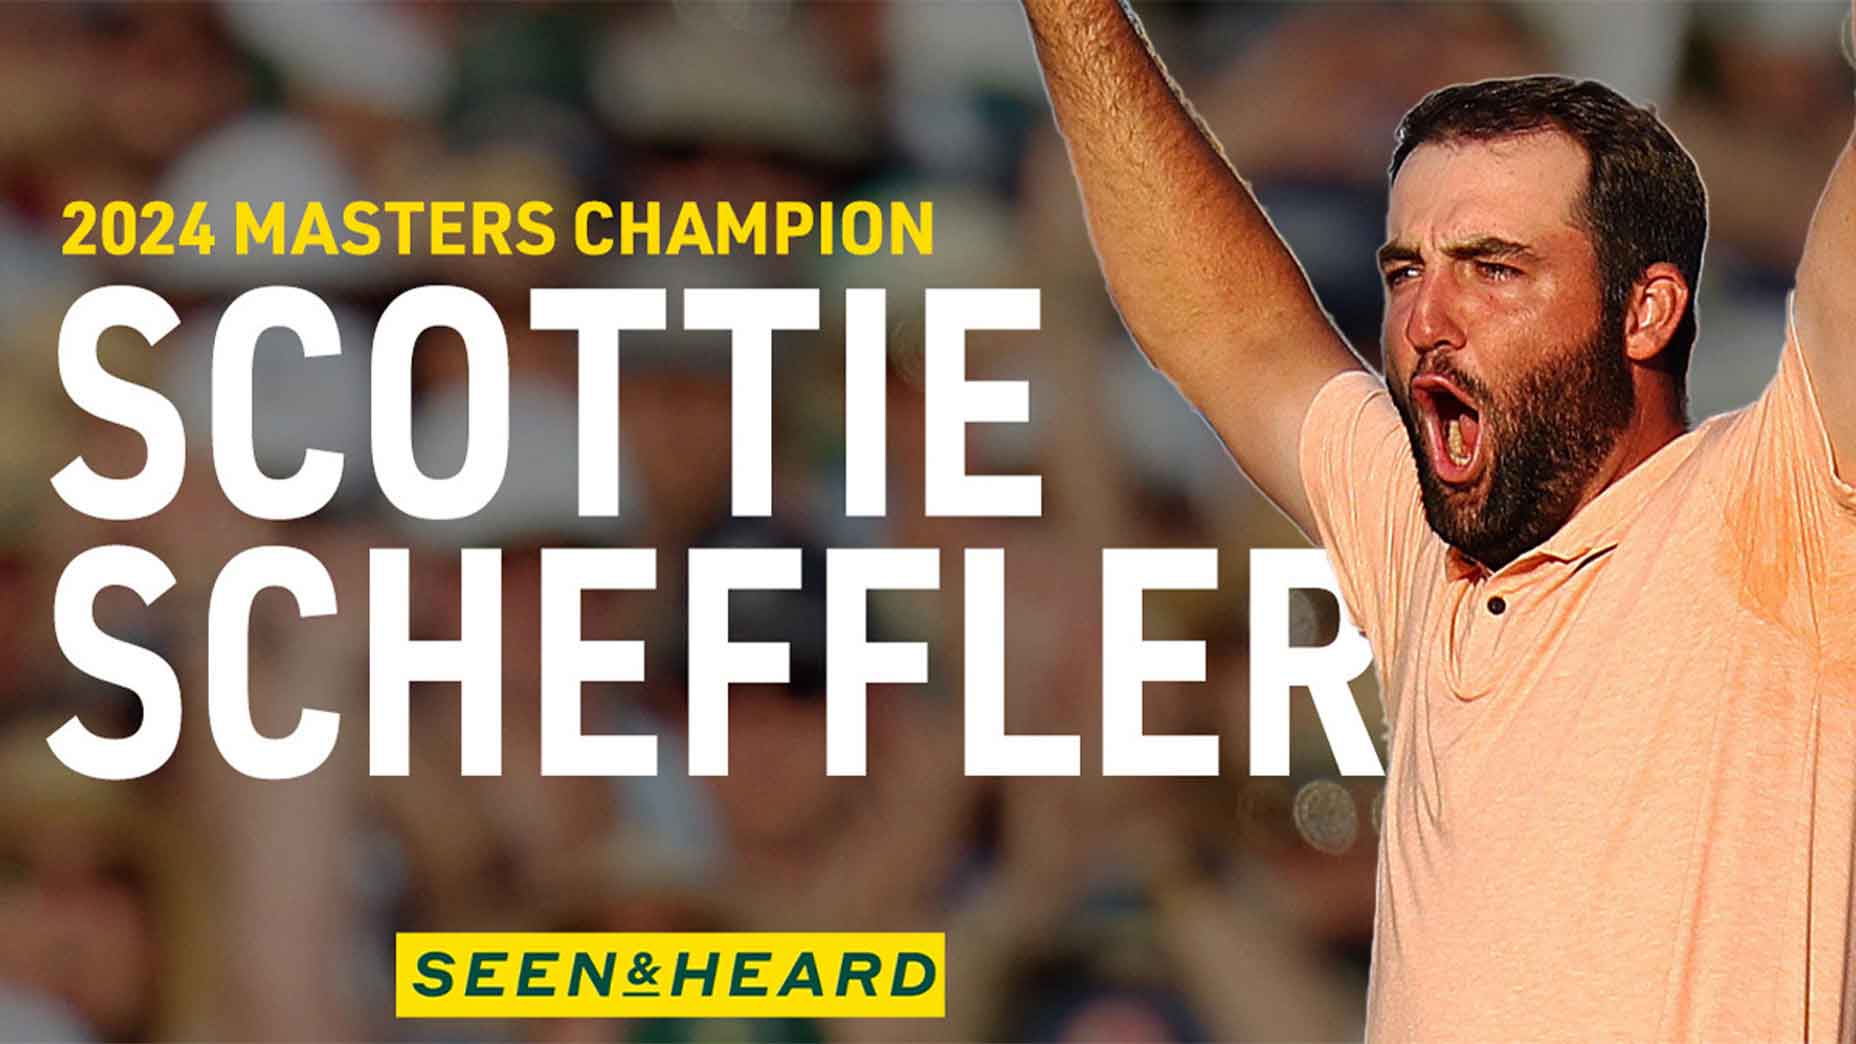 Scottie Scheffler raises arms after winning 2024 Masters